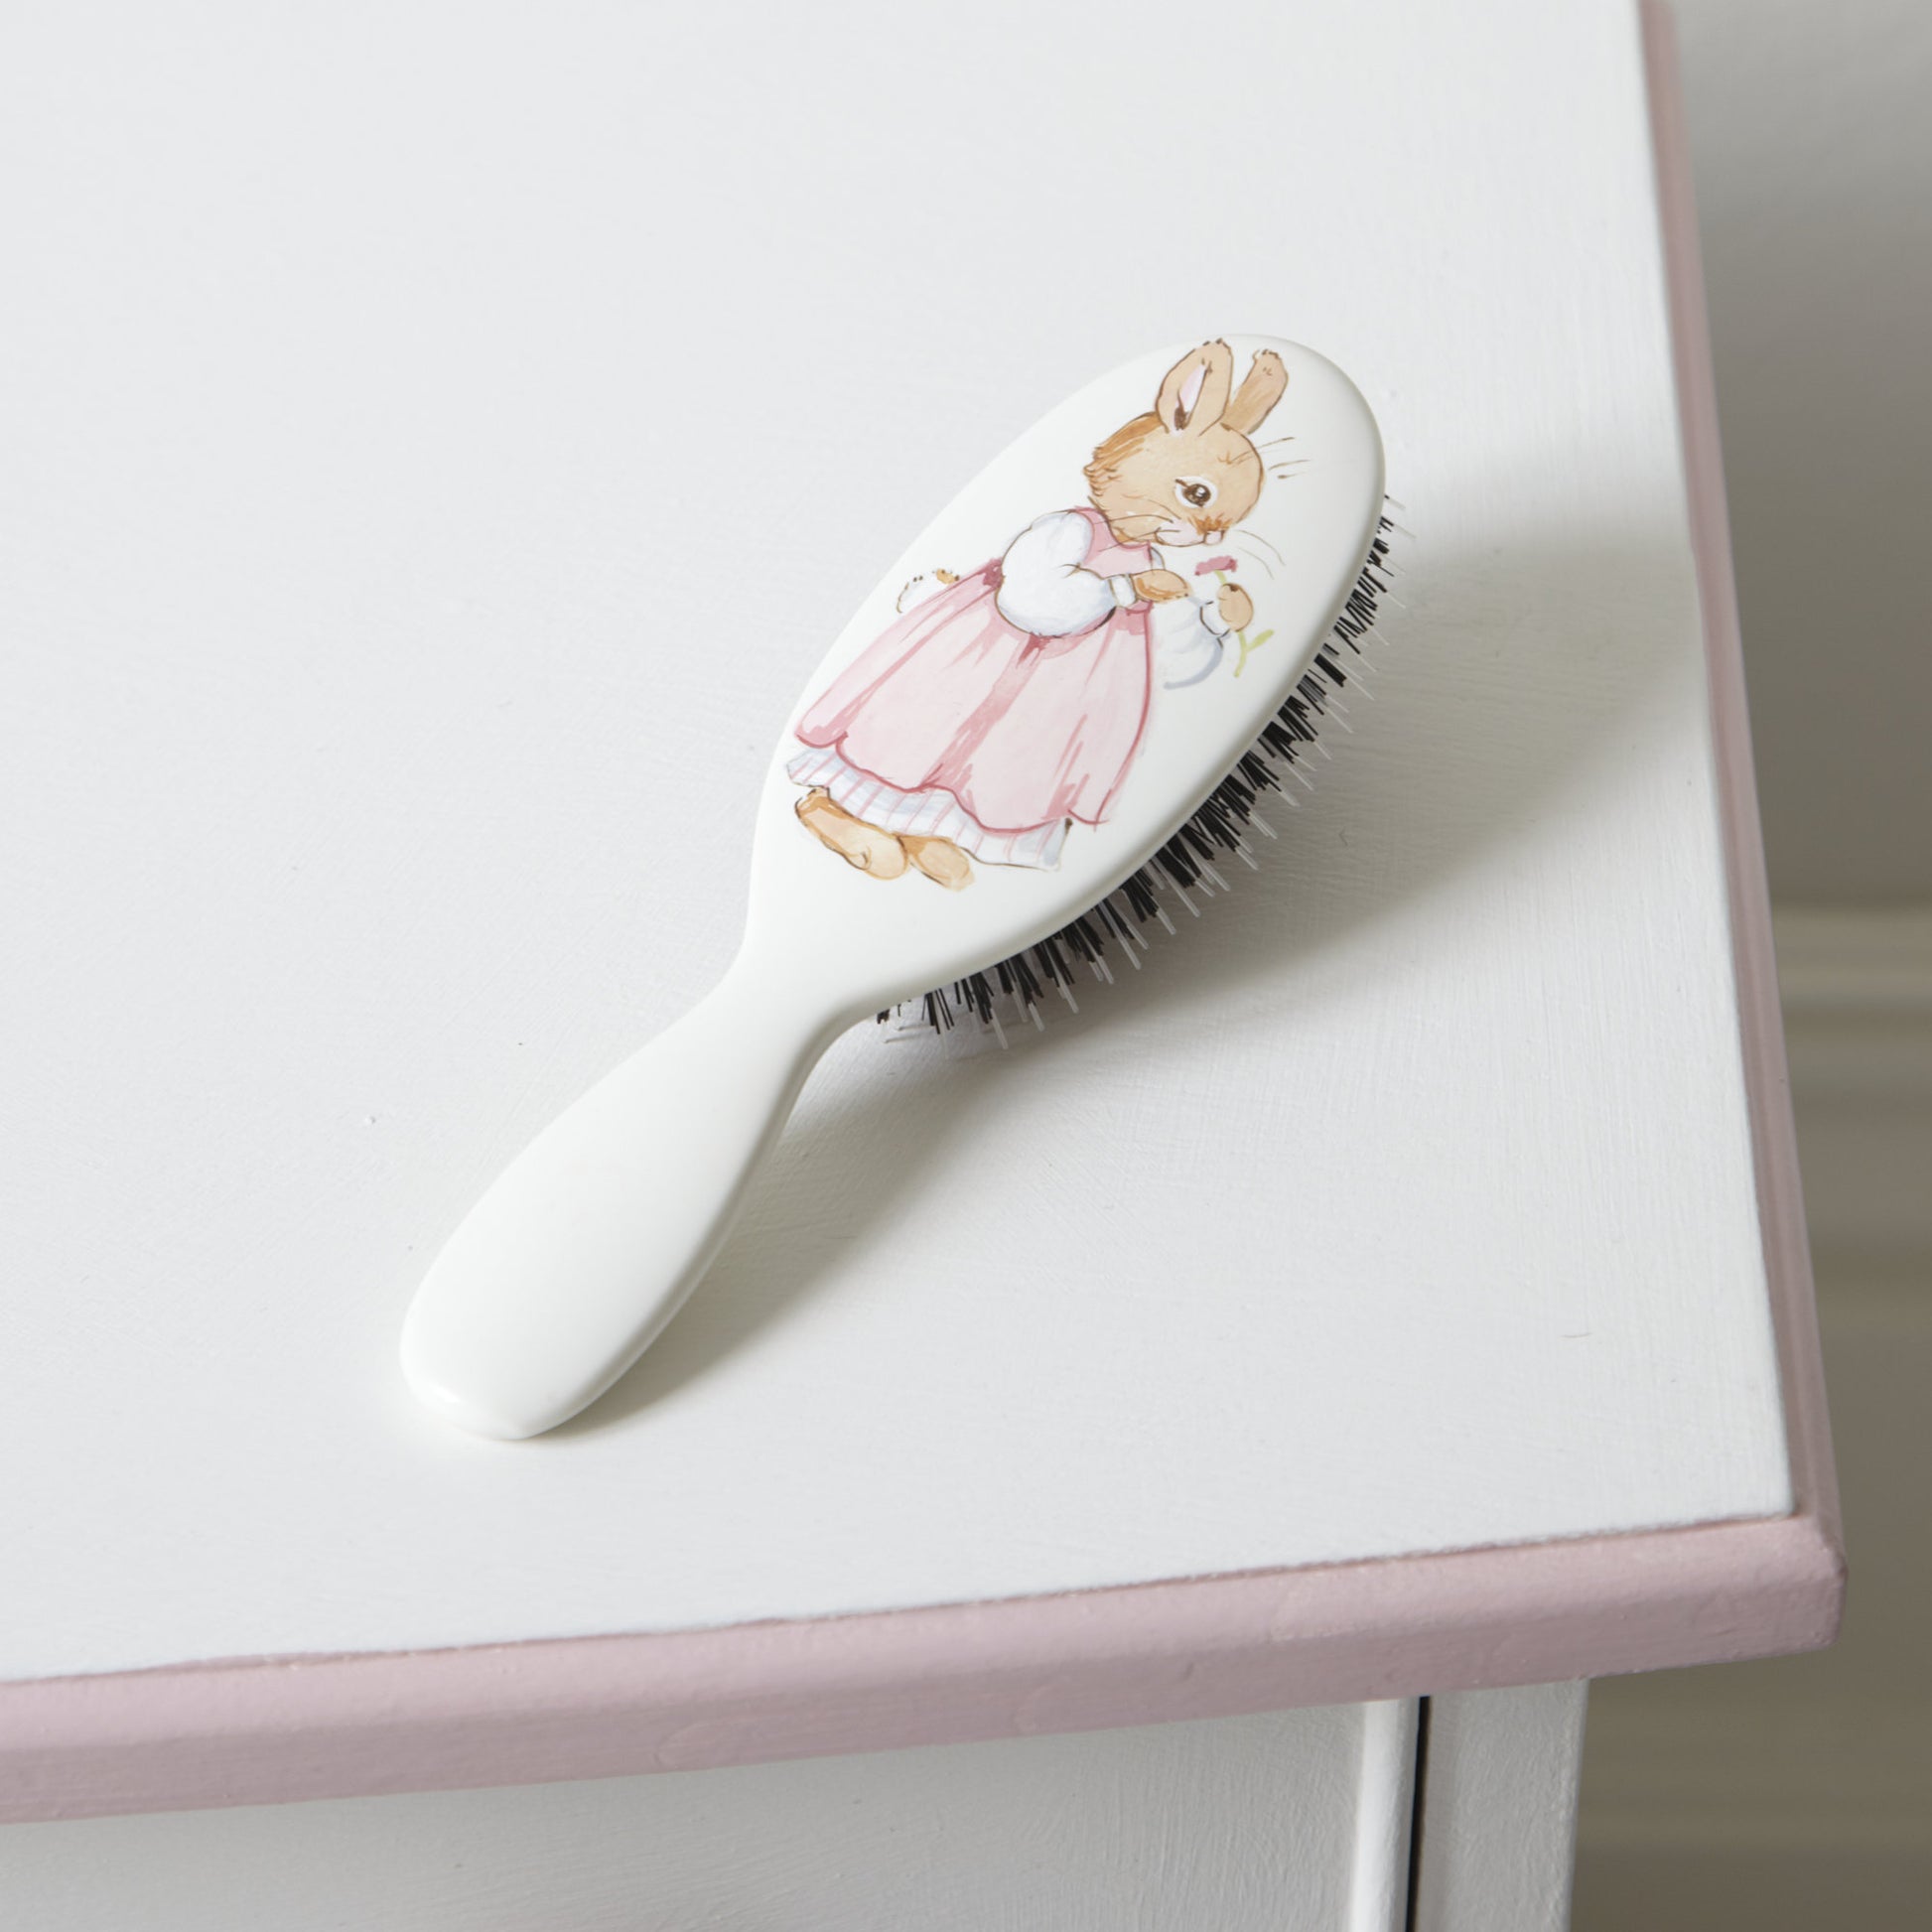 Small Hairbrush - Barbara's Bunny in Pink Dress